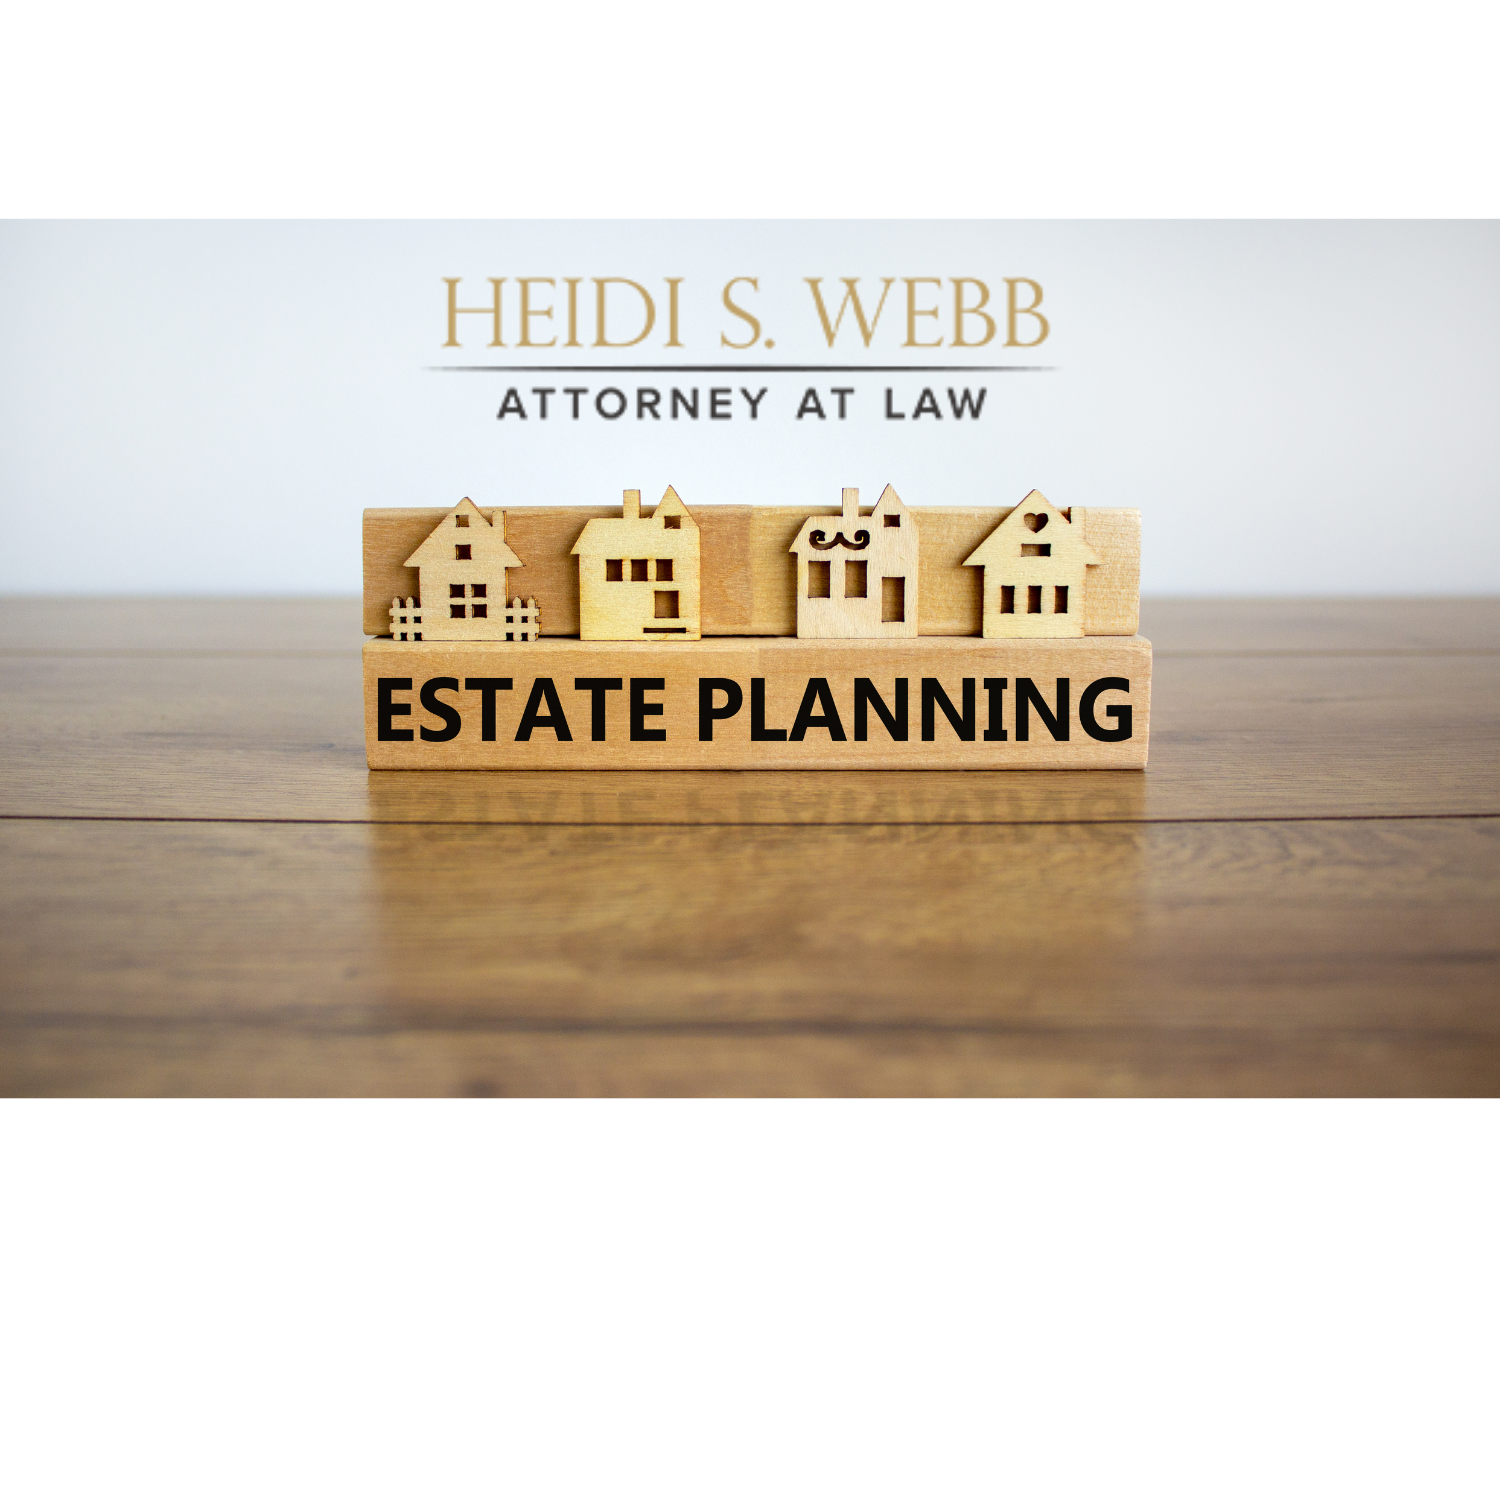 estate planning definitions